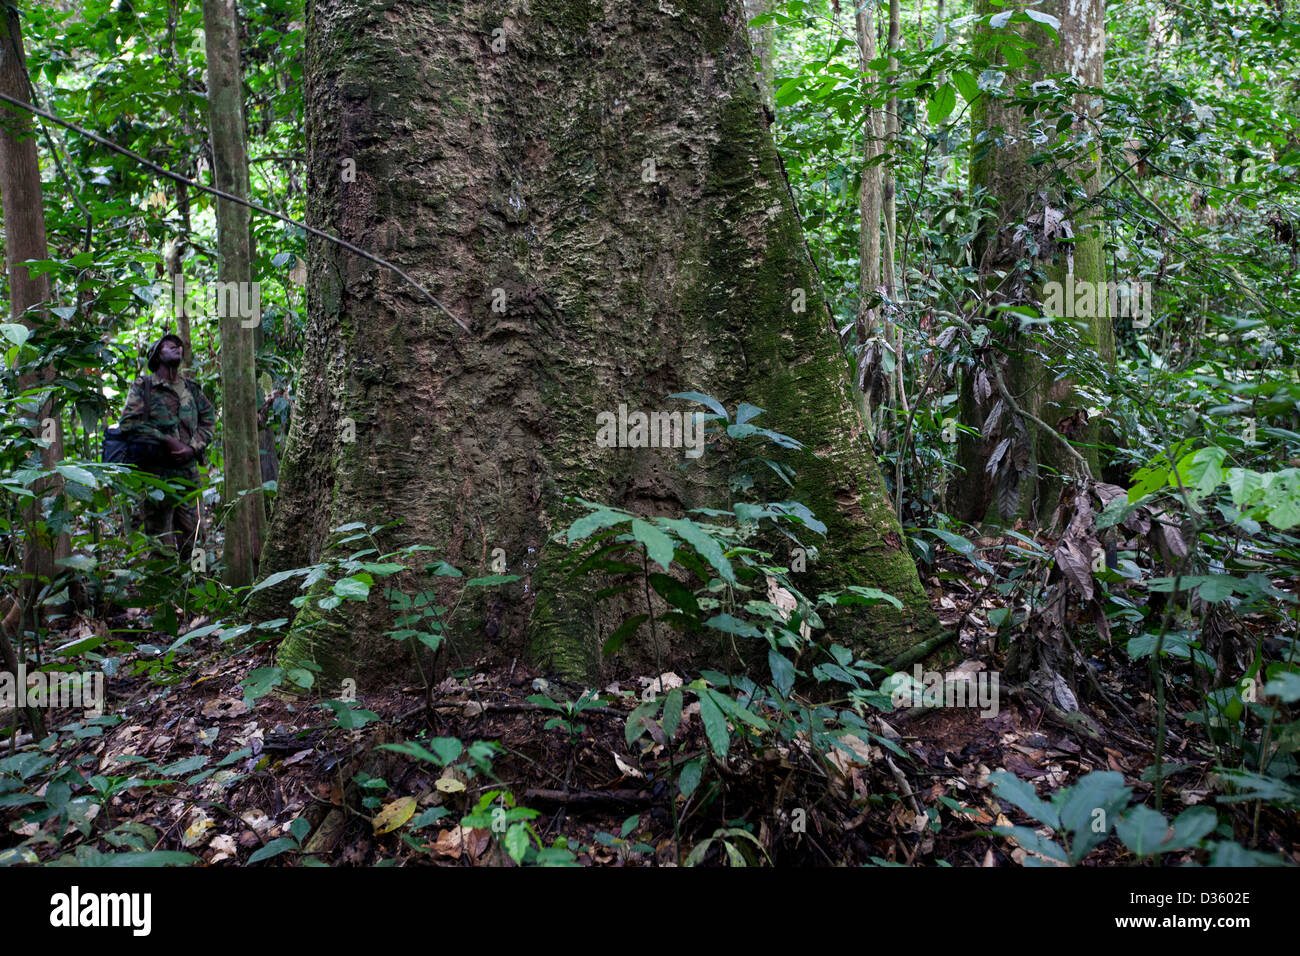 Kongo, 29. September 2012: Bäume im Nationalpark Messok Dja. Stockfoto